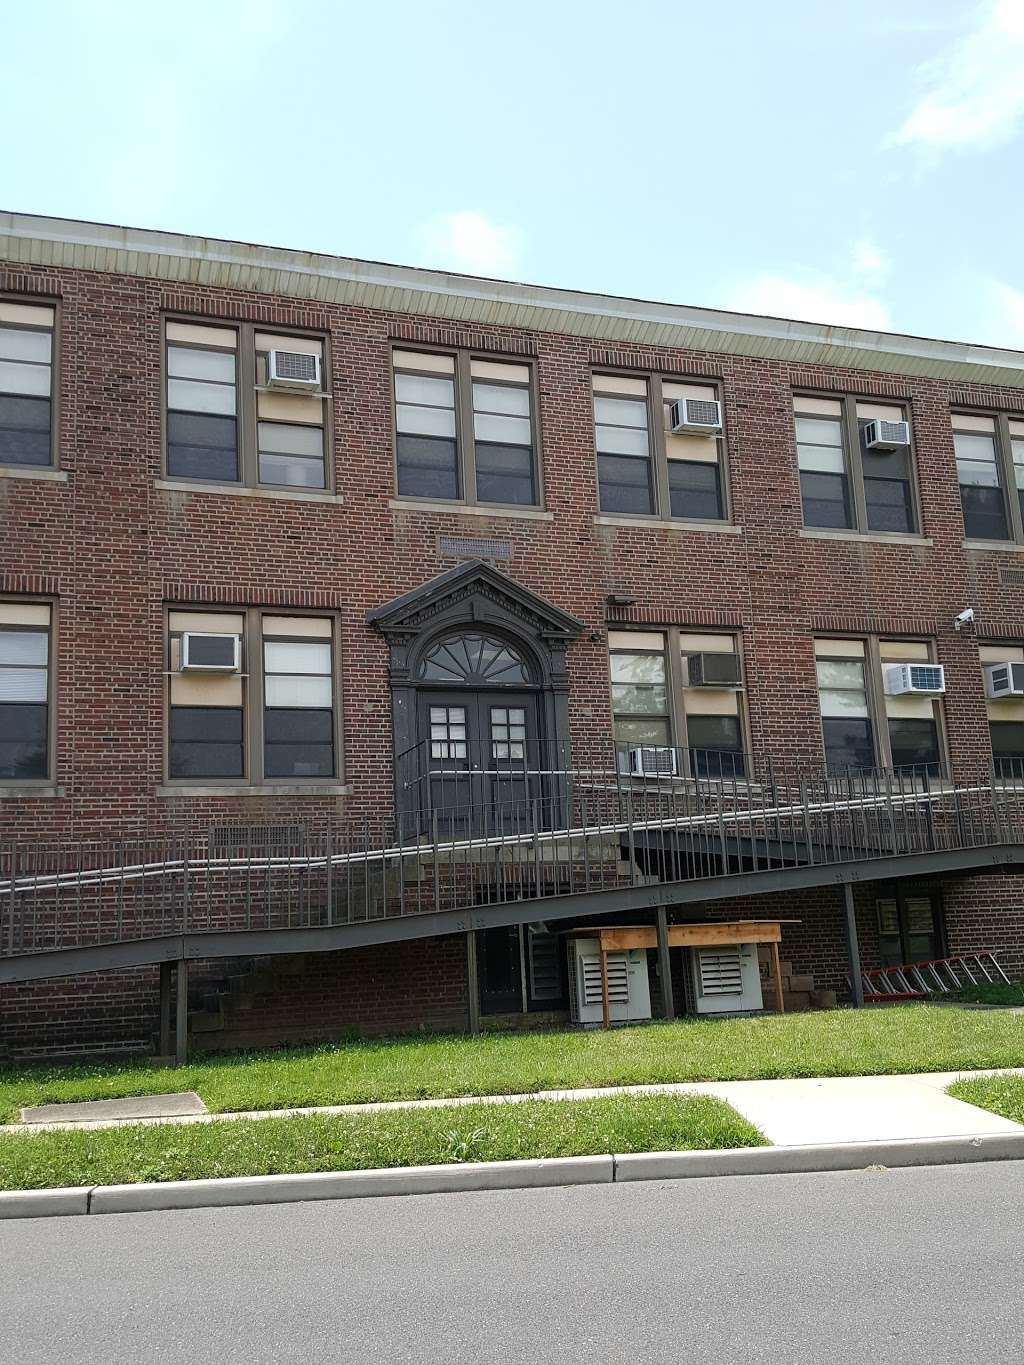 Hamilton Township School District - school  | Photo 1 of 3 | Address: 90 Park Ave, Trenton, NJ 08690, USA | Phone: (609) 631-4100